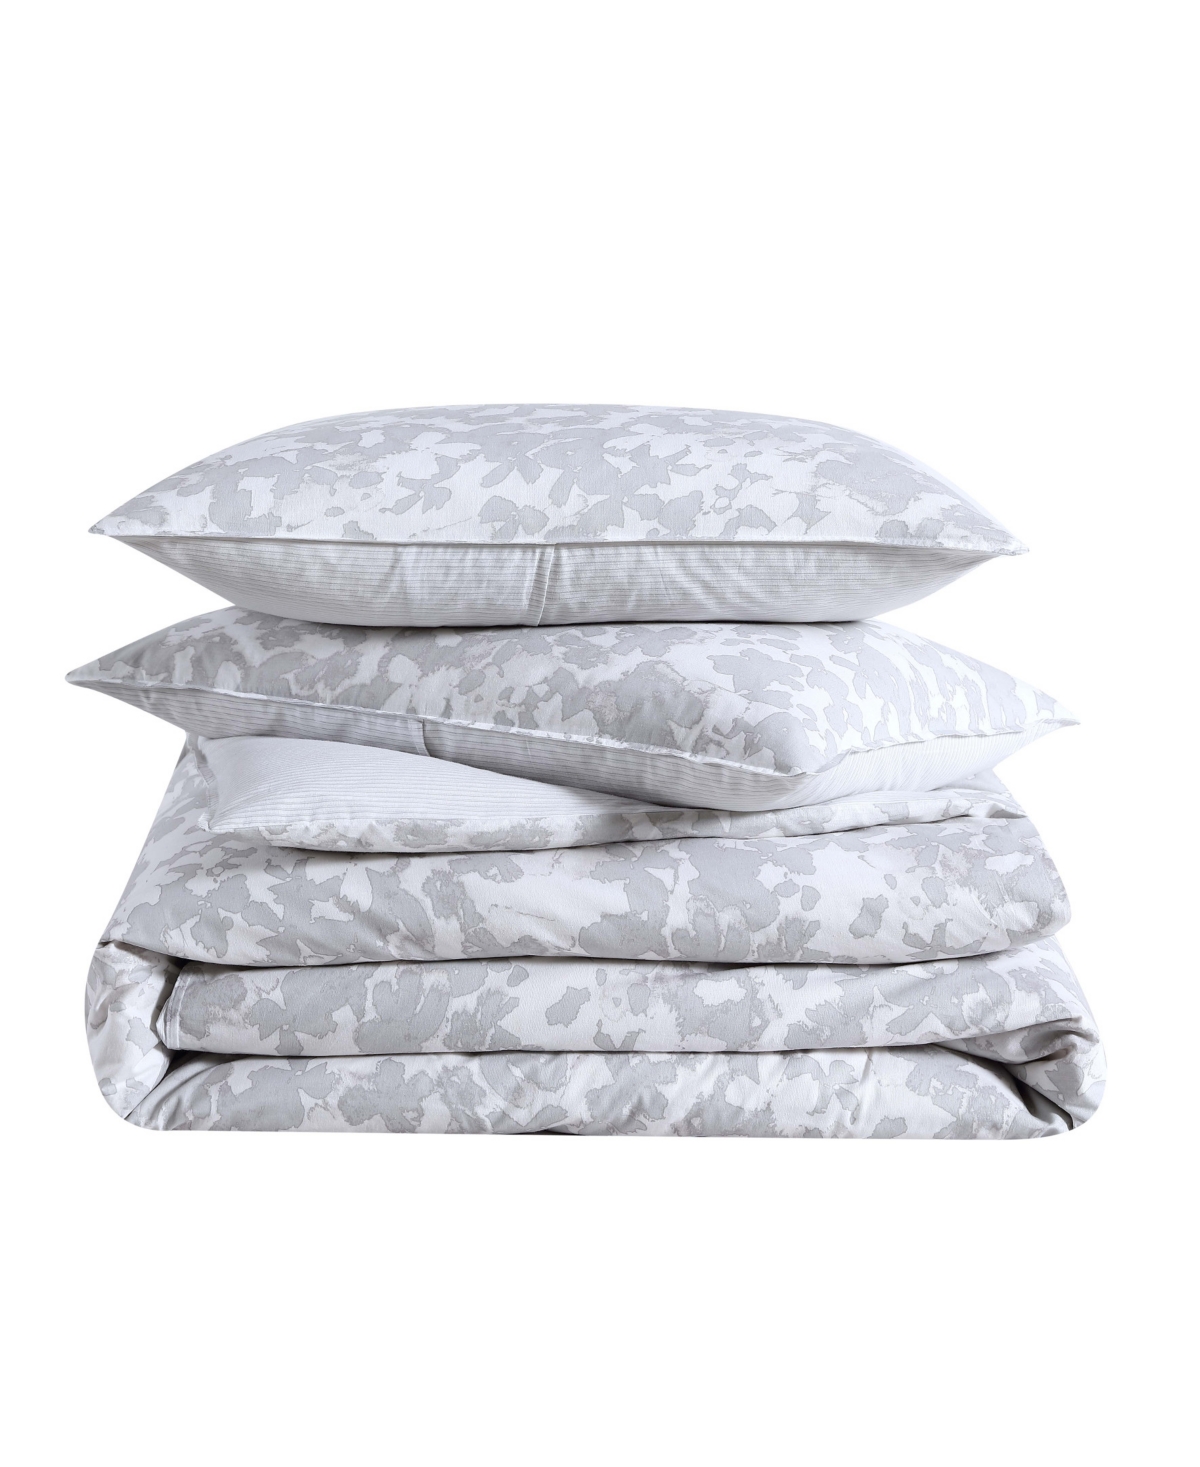 Kenneth Cole New York Merrion Organic Cotton 3 Pc Duvet Cover Set, Full/queen Bedding In Light Gray